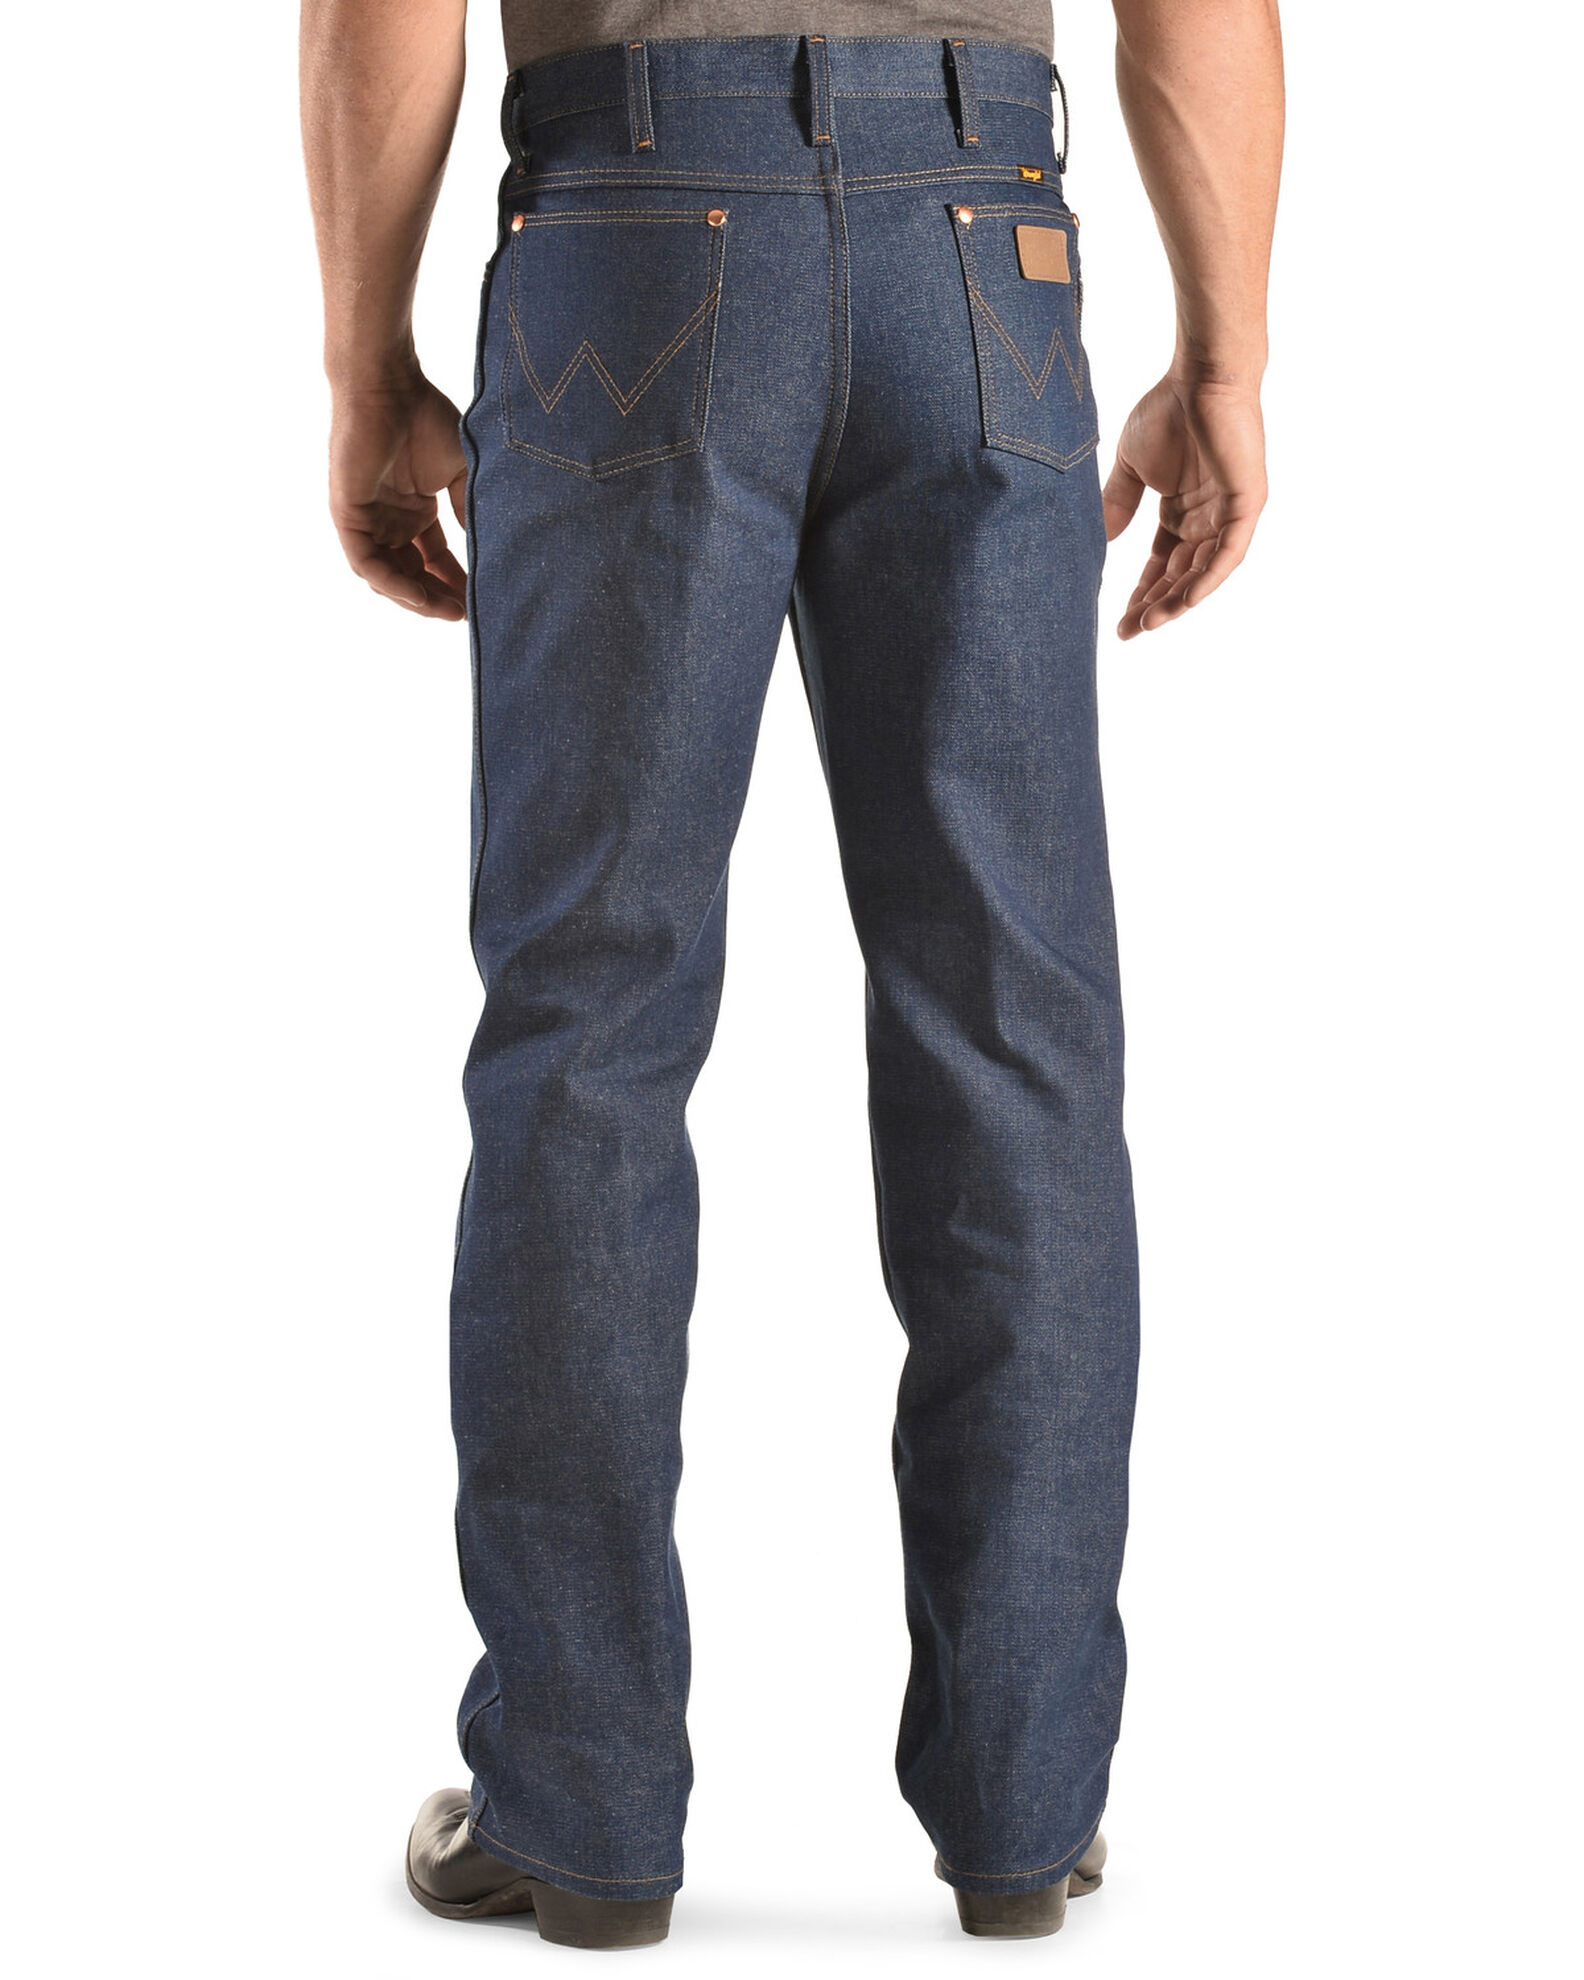 Wrangler 936 Cowboy Cut Rigid Slim Fit Jeans - 38